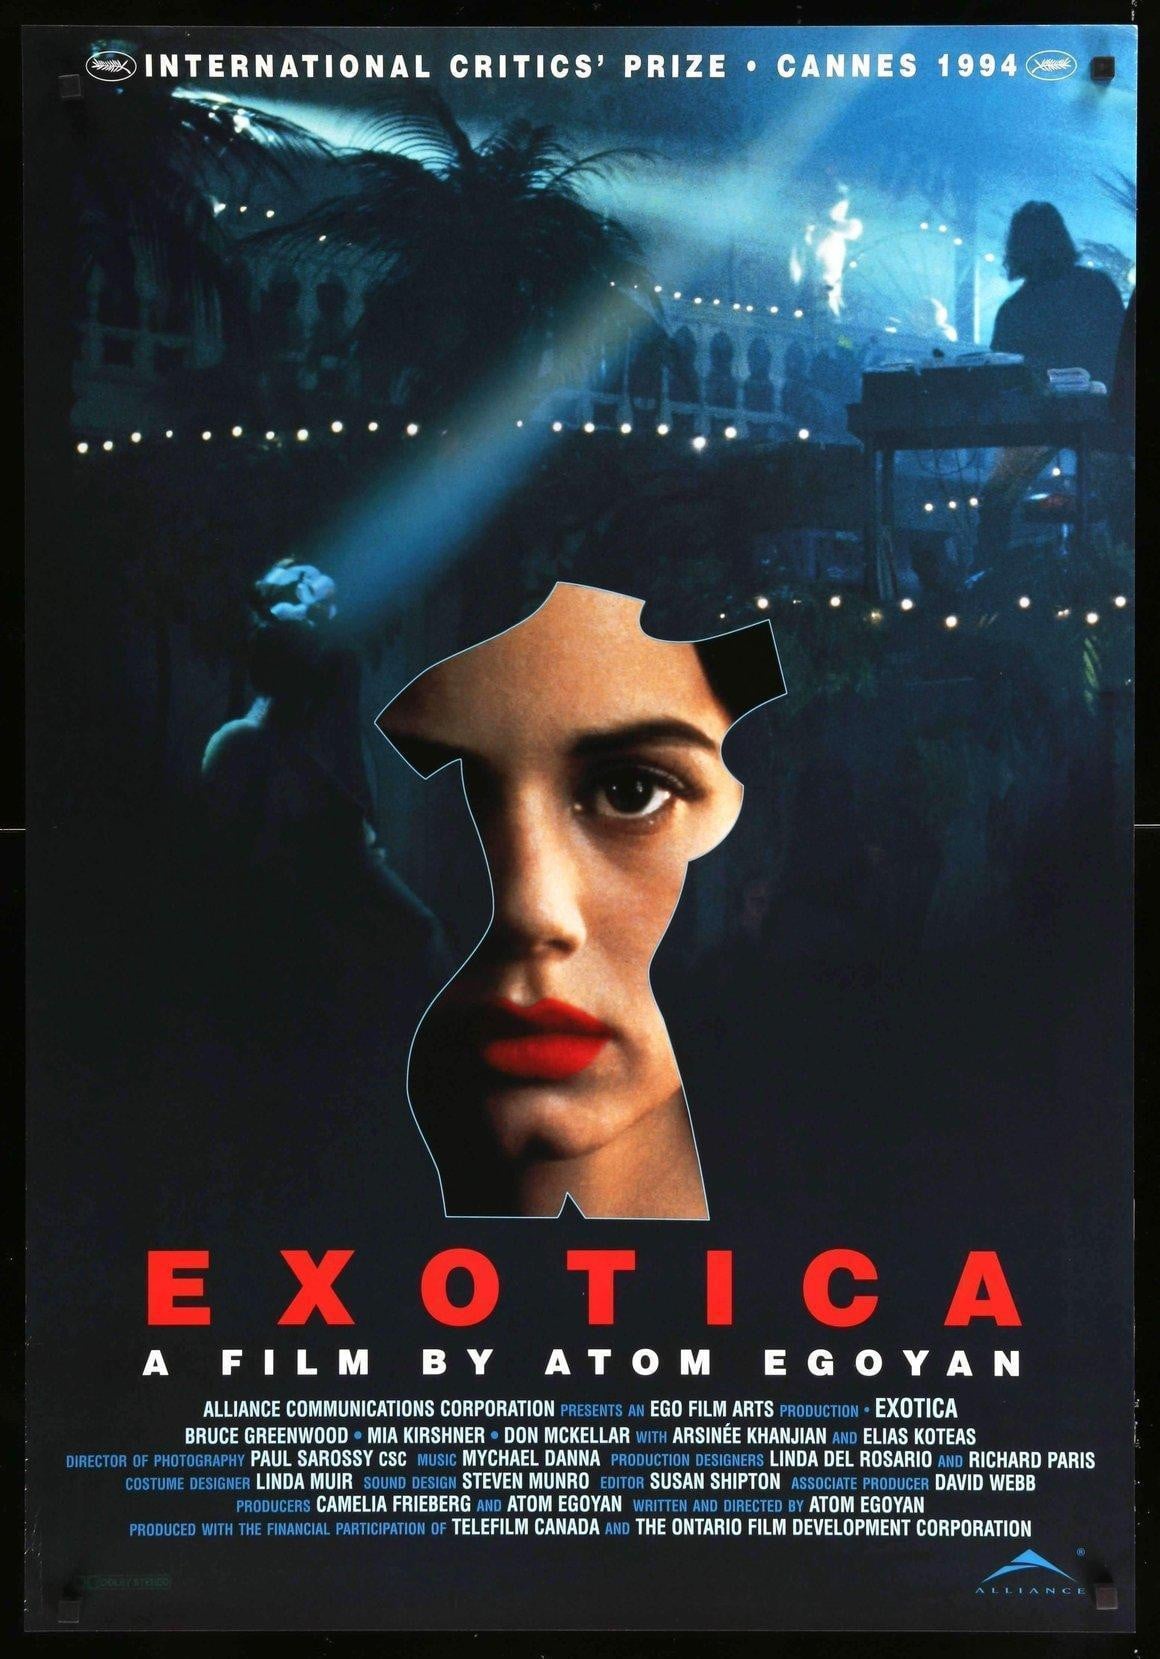 Exotica (1994) original movie poster for sale at Original Film Art